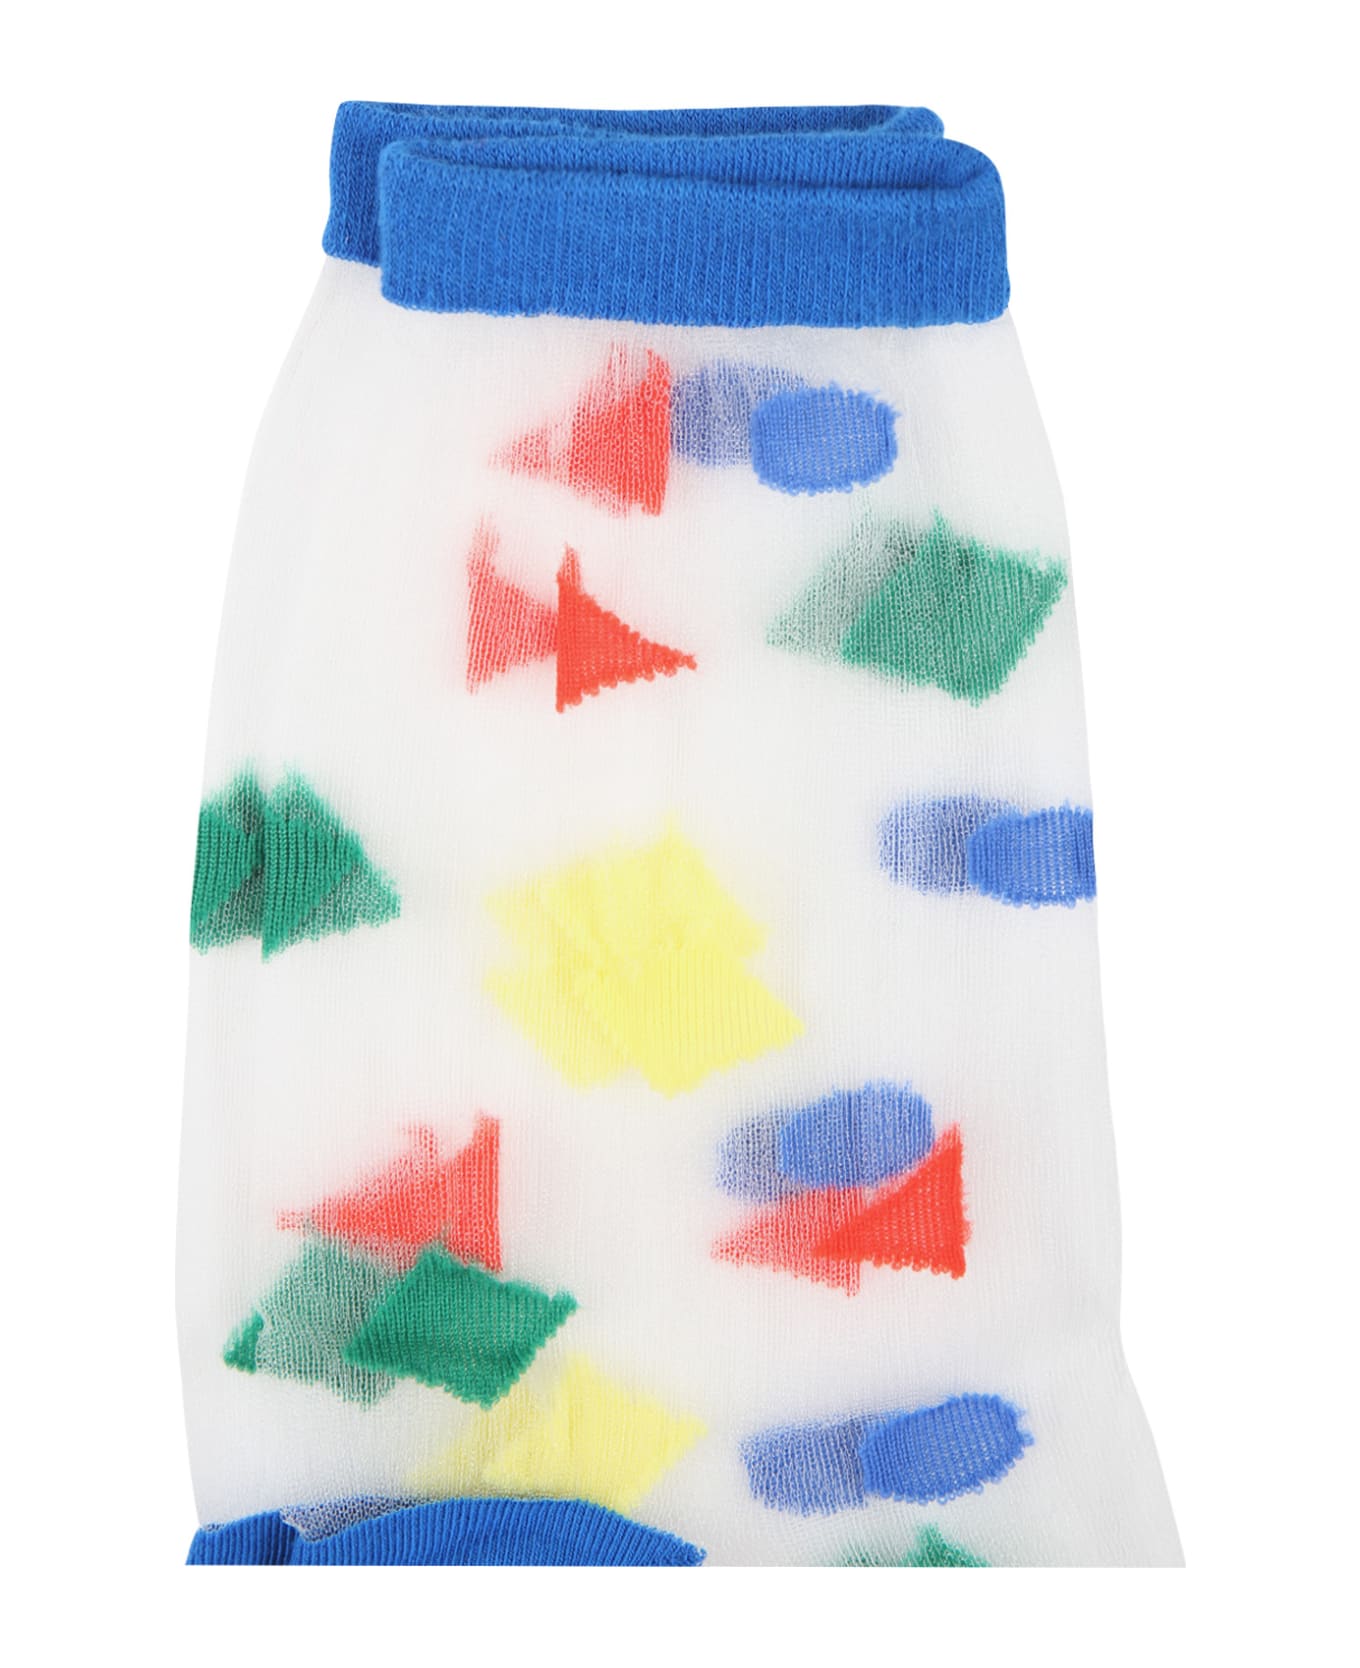 Bobo Choses Multicolor Socks For Kids With Logo - Multicolor シューズ